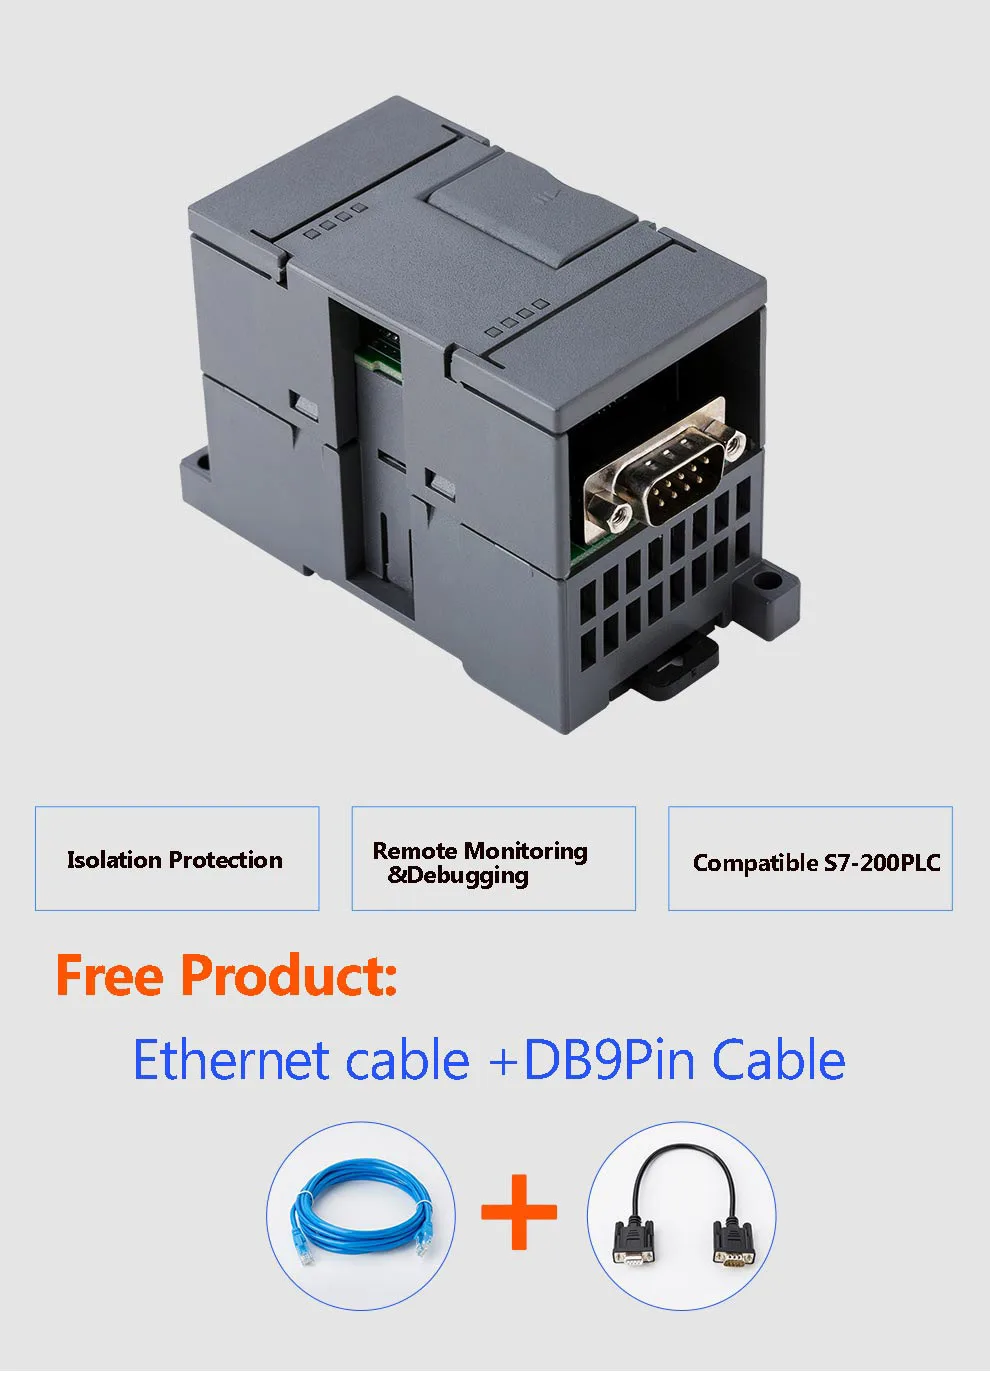 CP243i ETH-PPI изолированный S7-200 модуль Ethernet Коммуникационный адаптер CP243-1 6GK7 243-1EX01-0XE0 suppot WIN7/8/XP